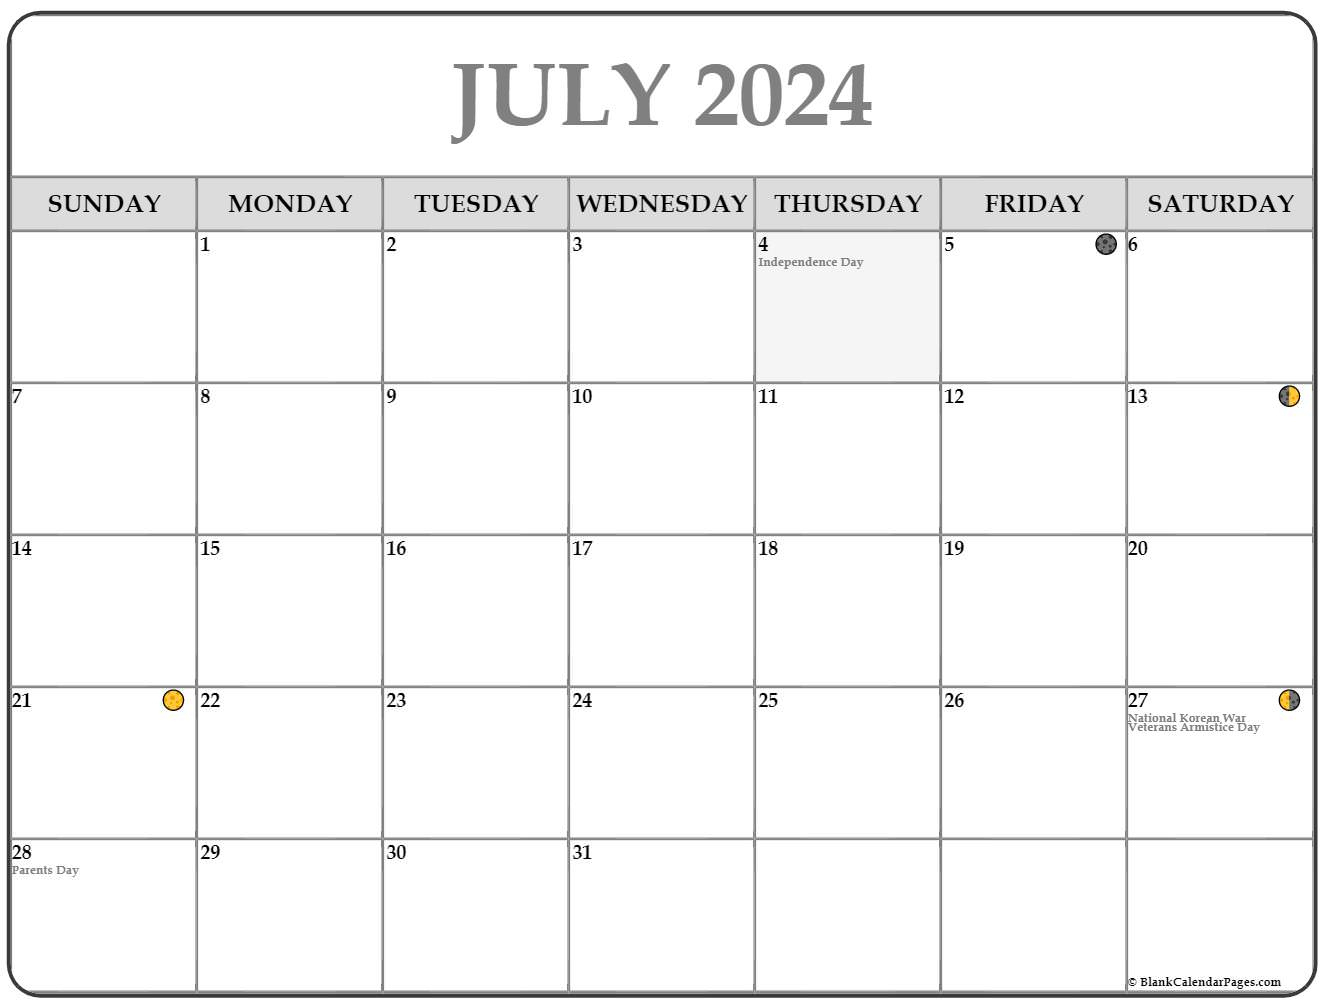 July 2024 Lunar Calendar | Moon Phase Calendar | Moon Phase Calendar For July 2024